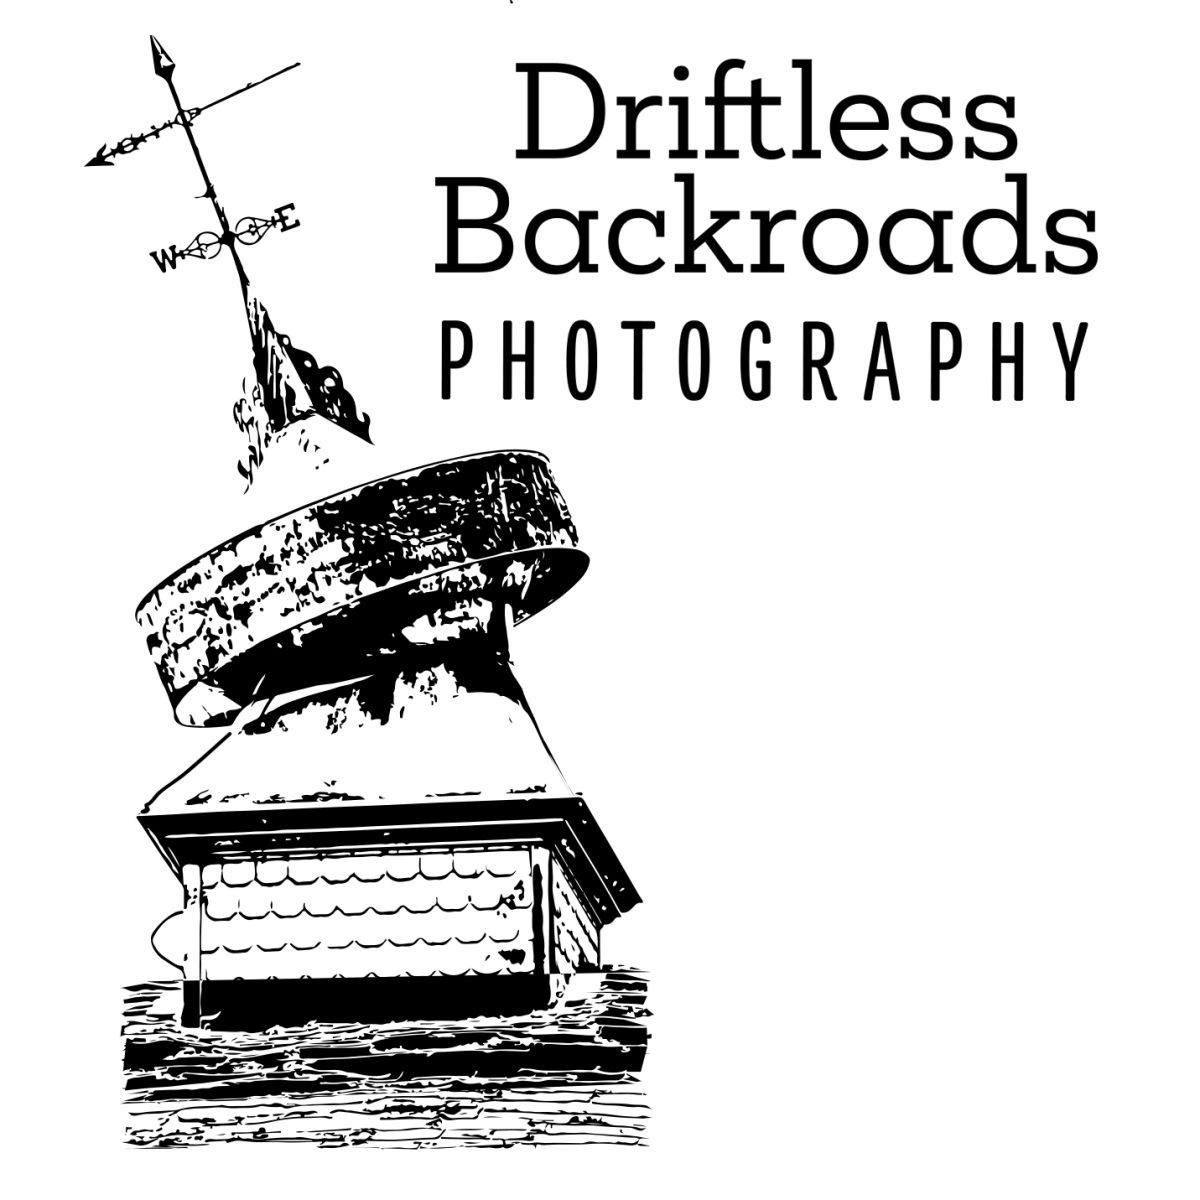 Driftless Backroads Photography